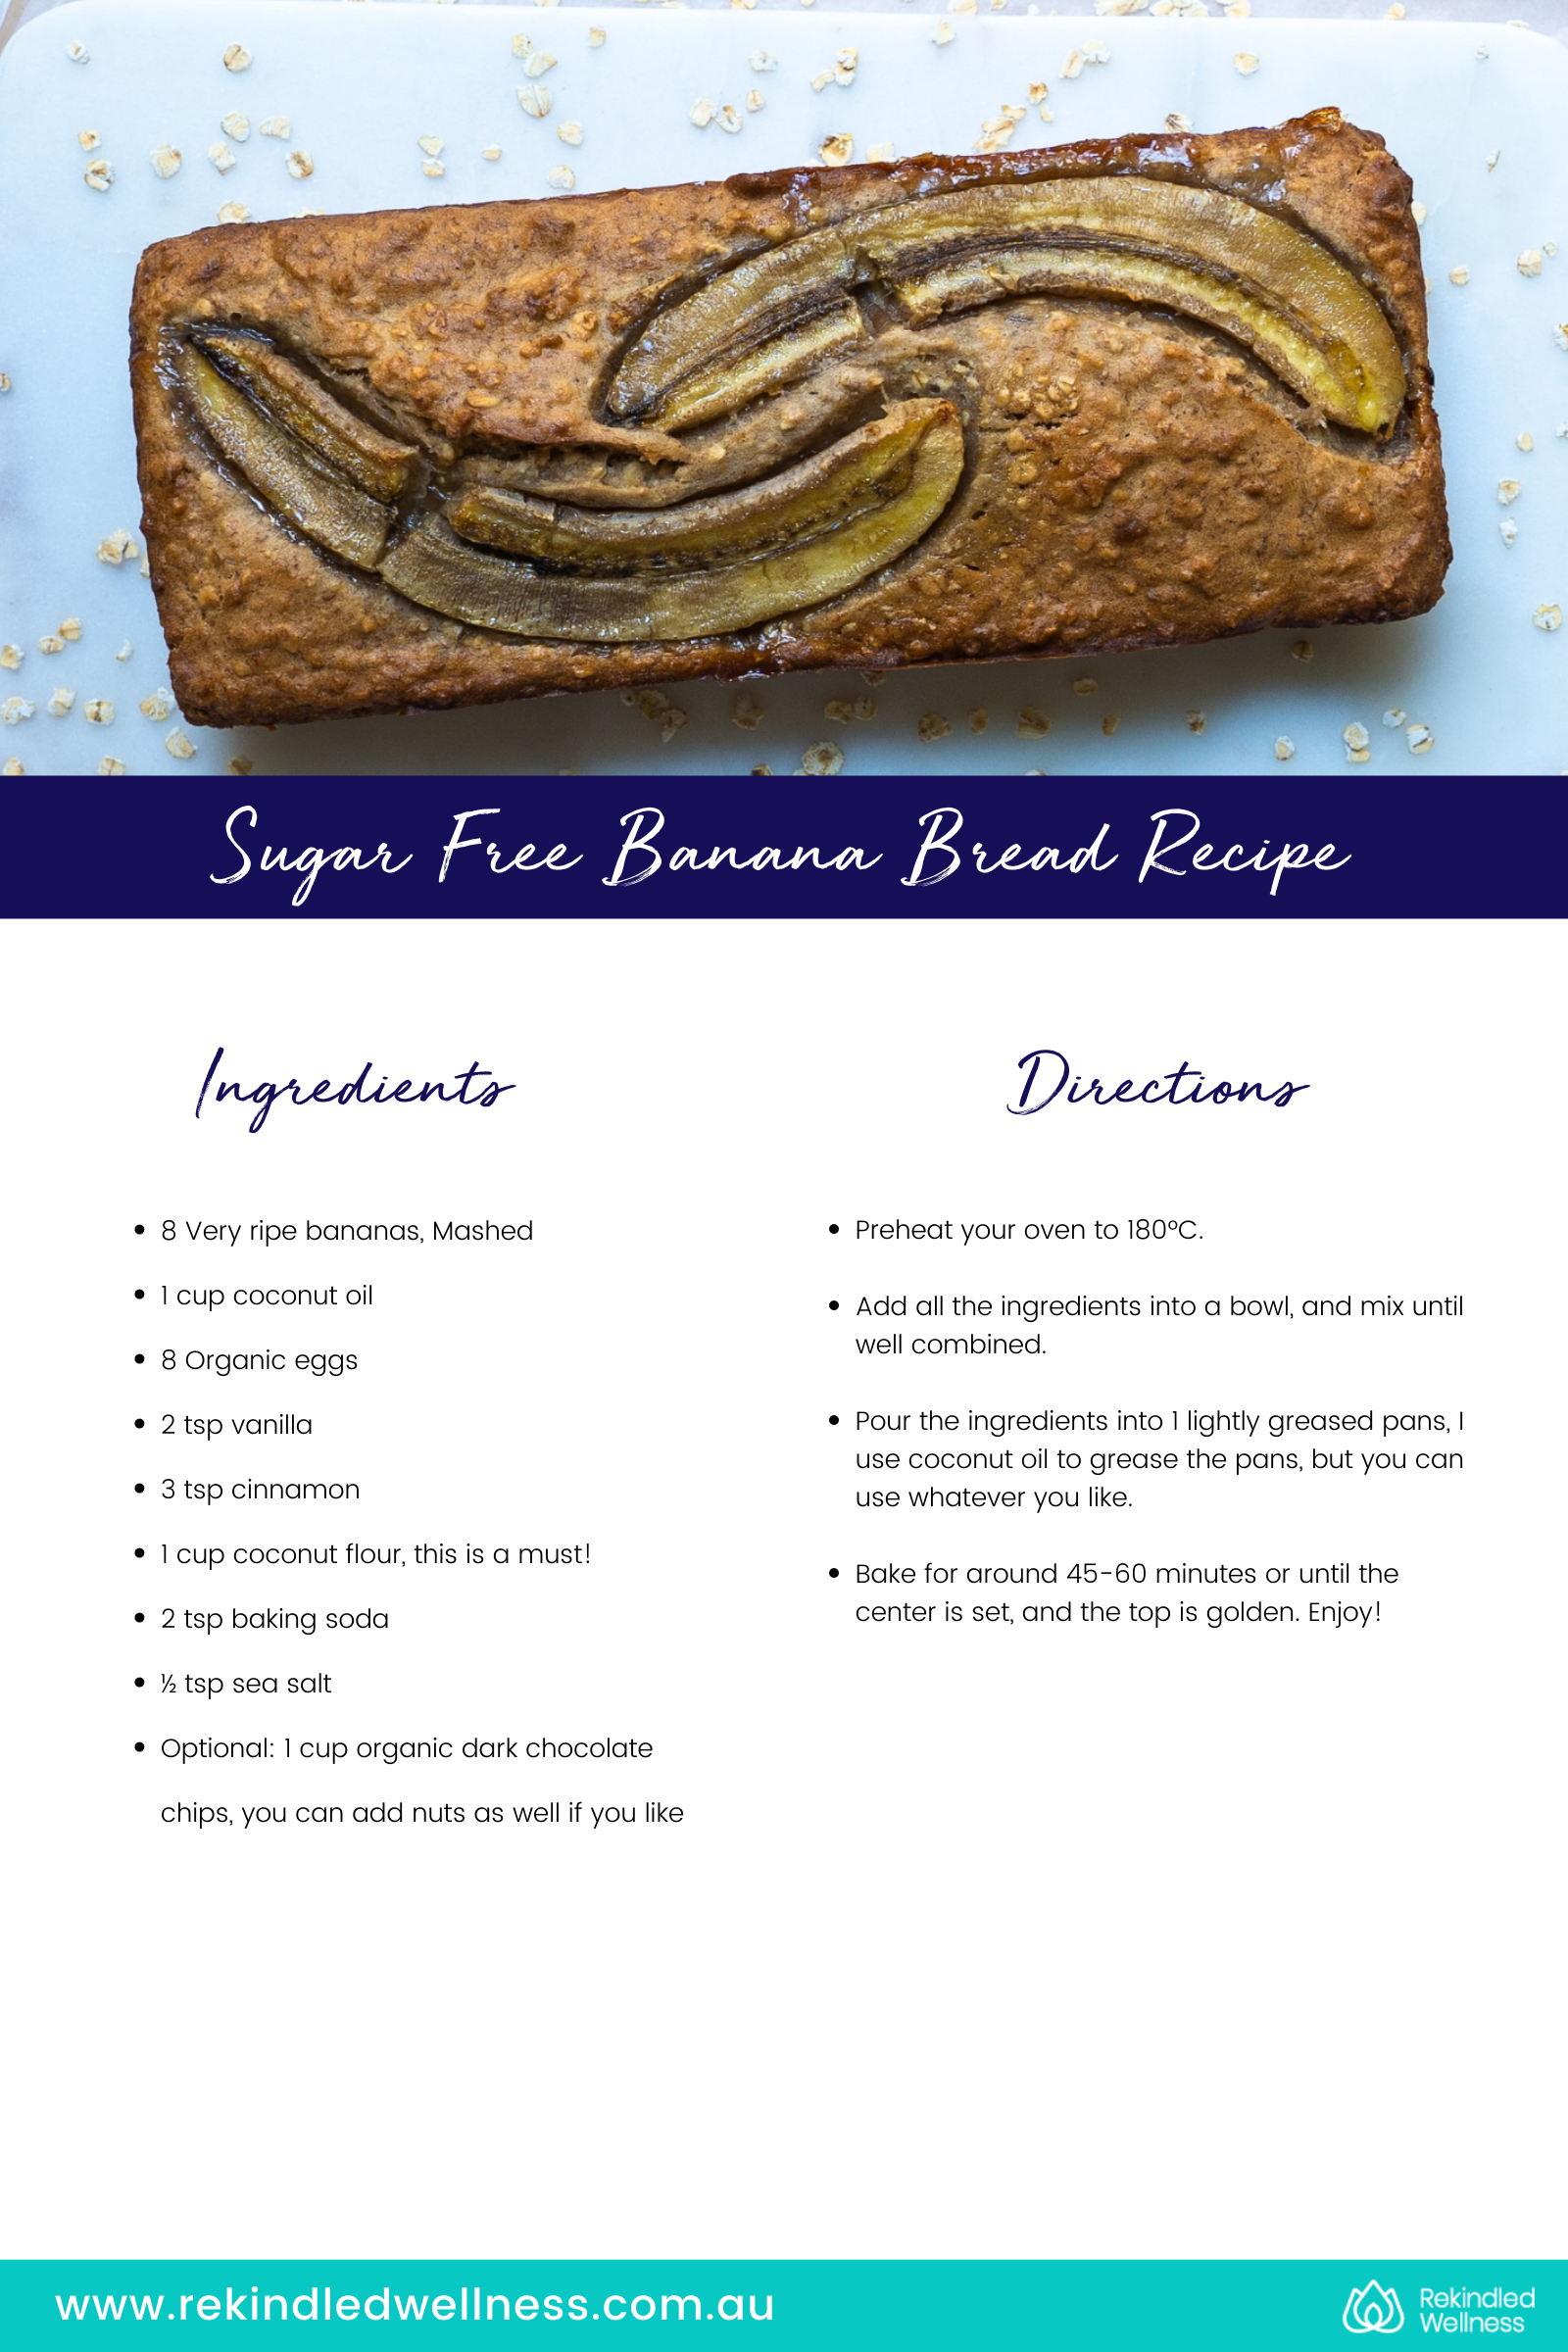 Sugar Free Banana bread recipe